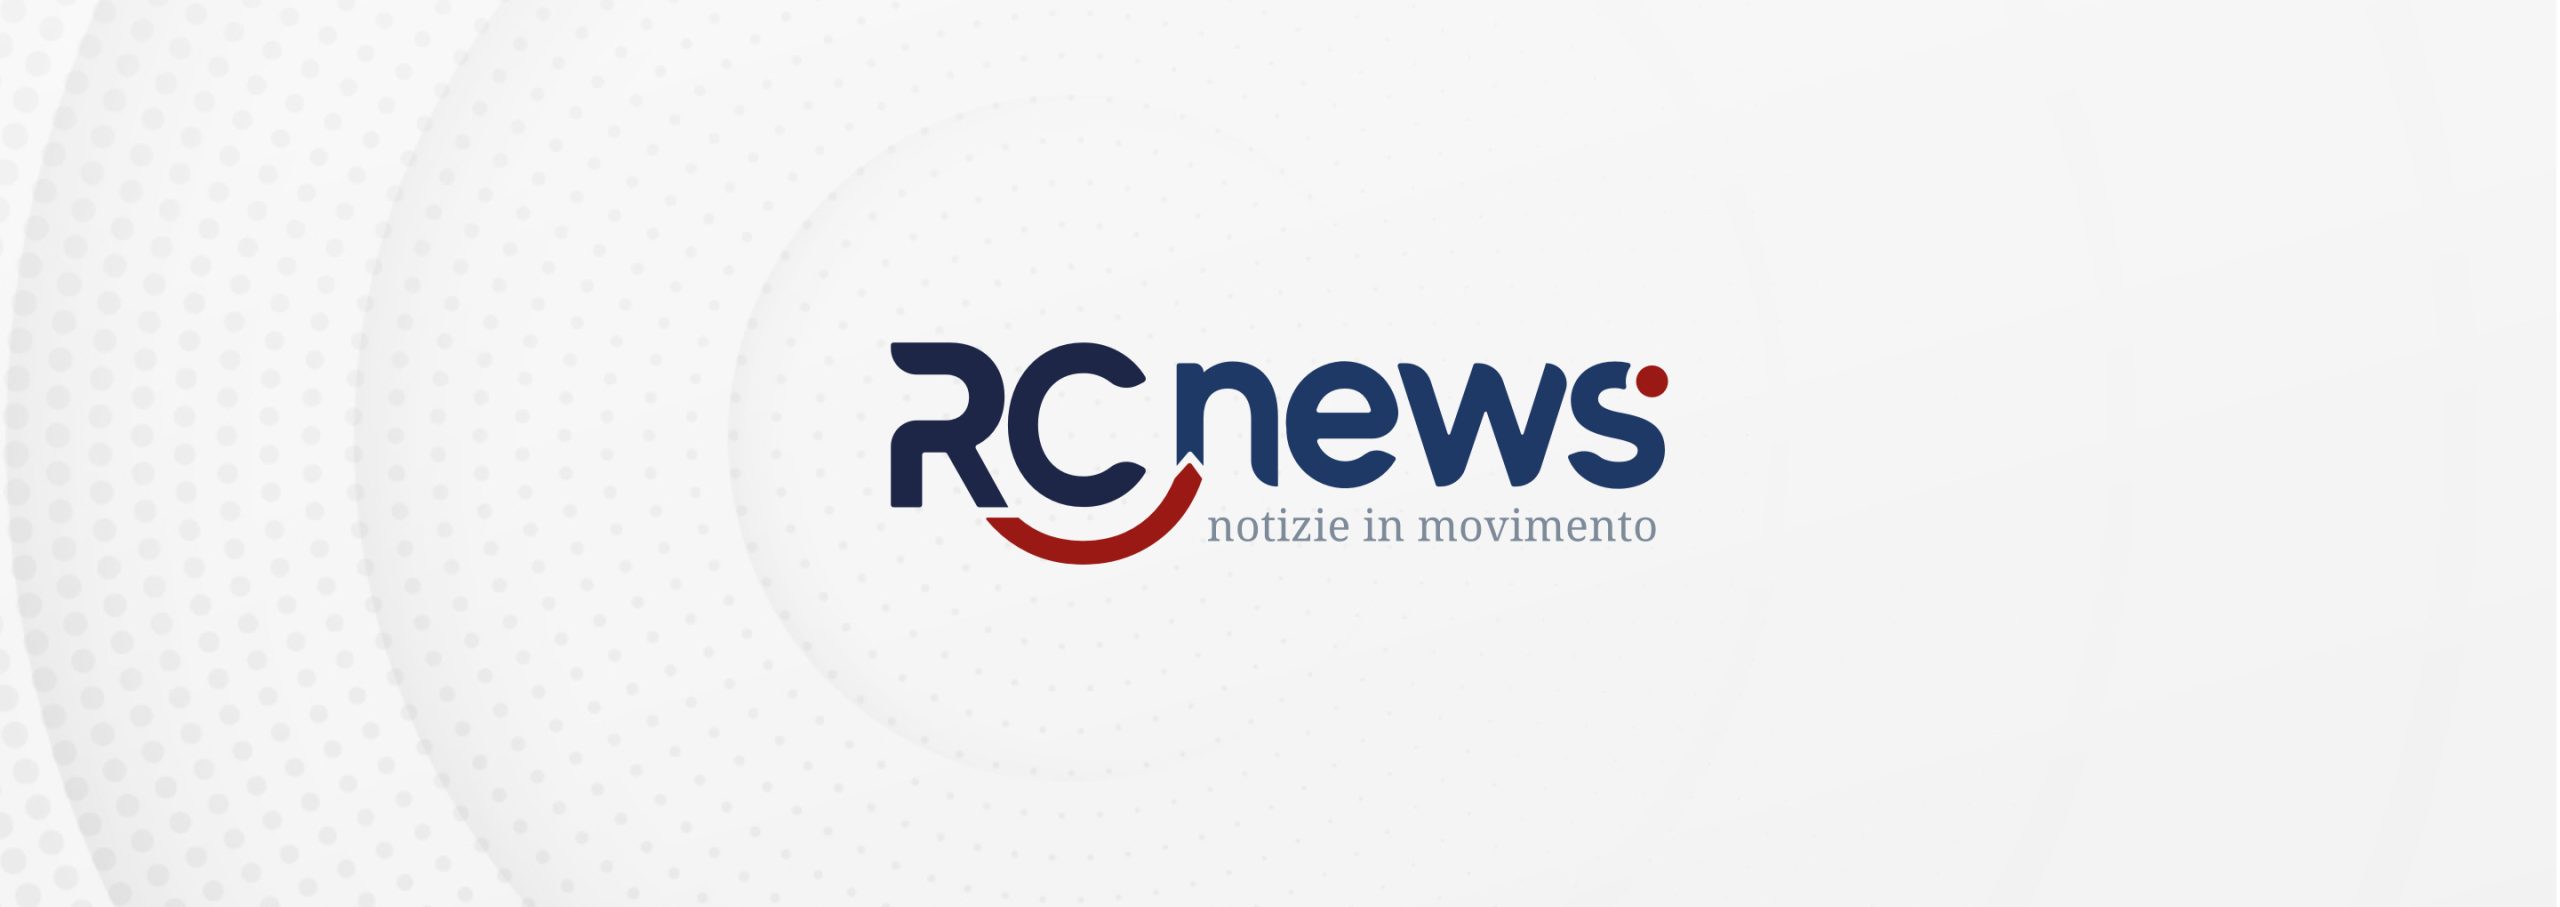 RCnews-top-banner@2x